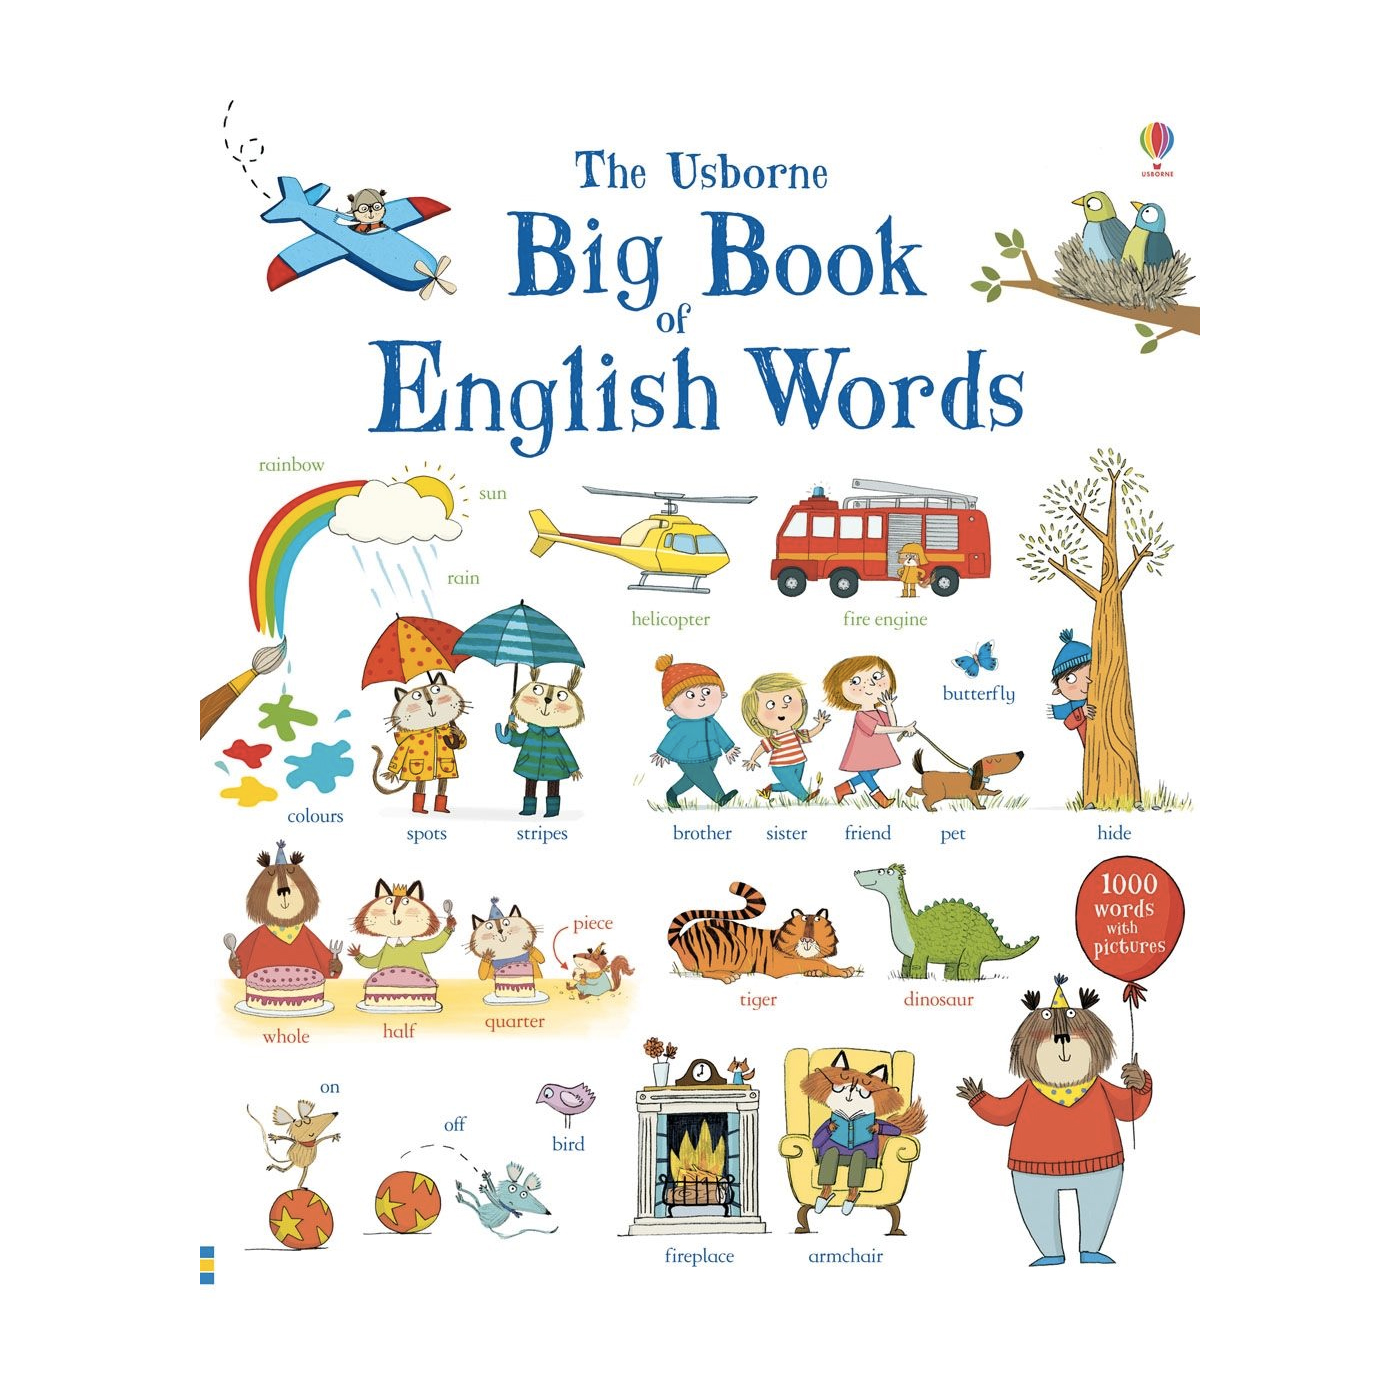  Big Book of English Words